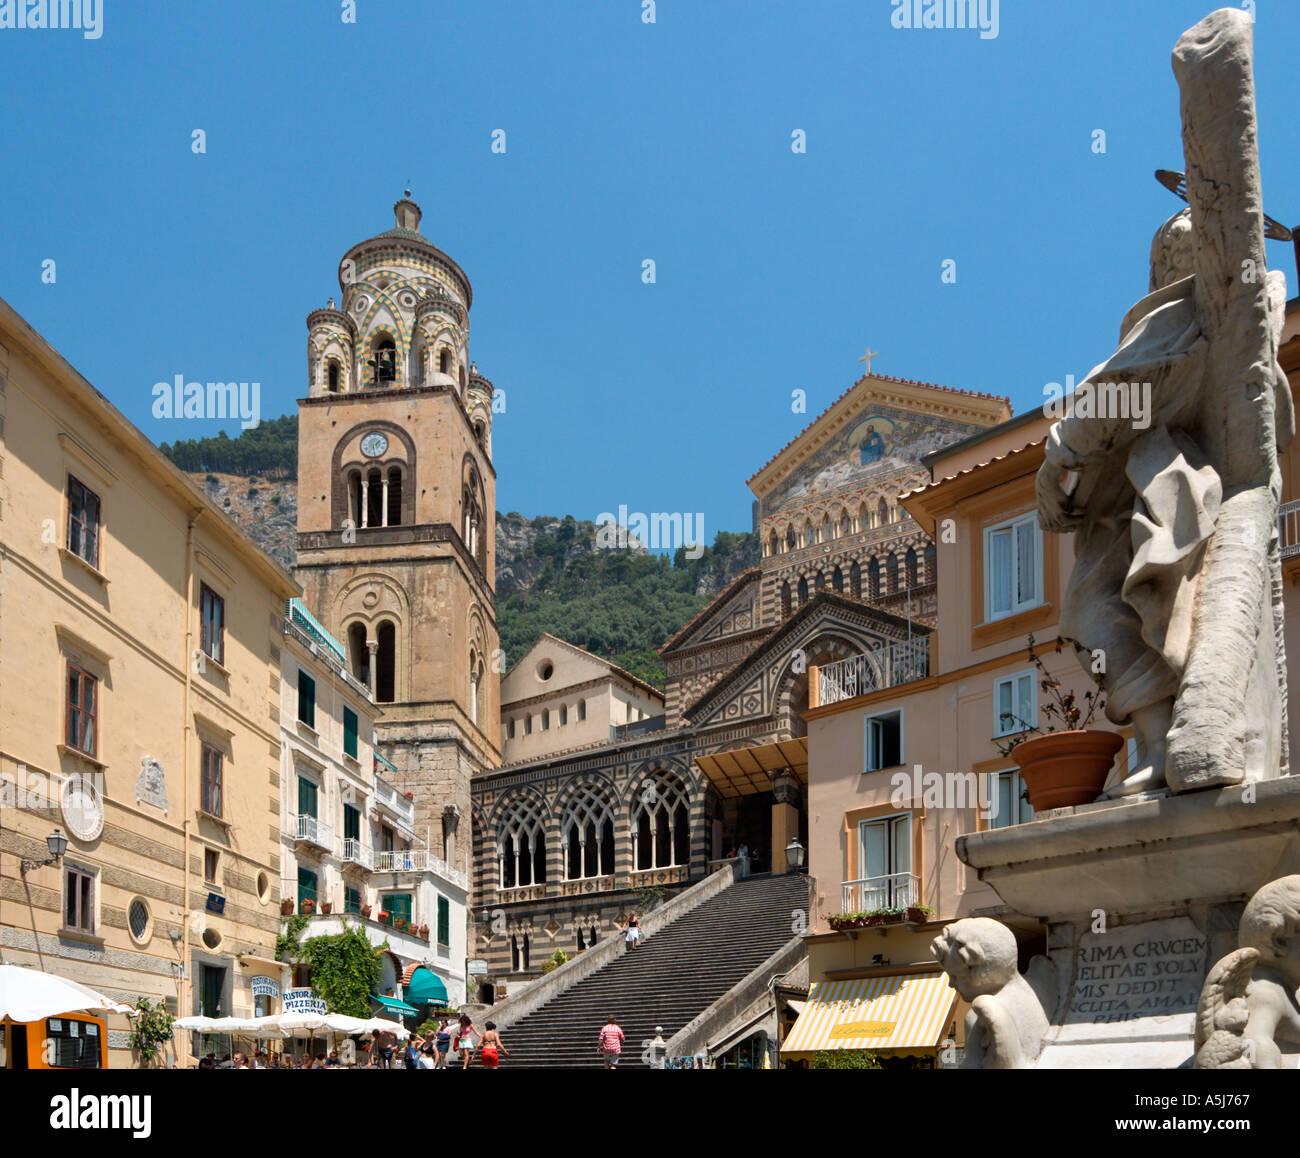 The Duomo, Amalfi, Neapolitan Riviera, Italy Stock Photo